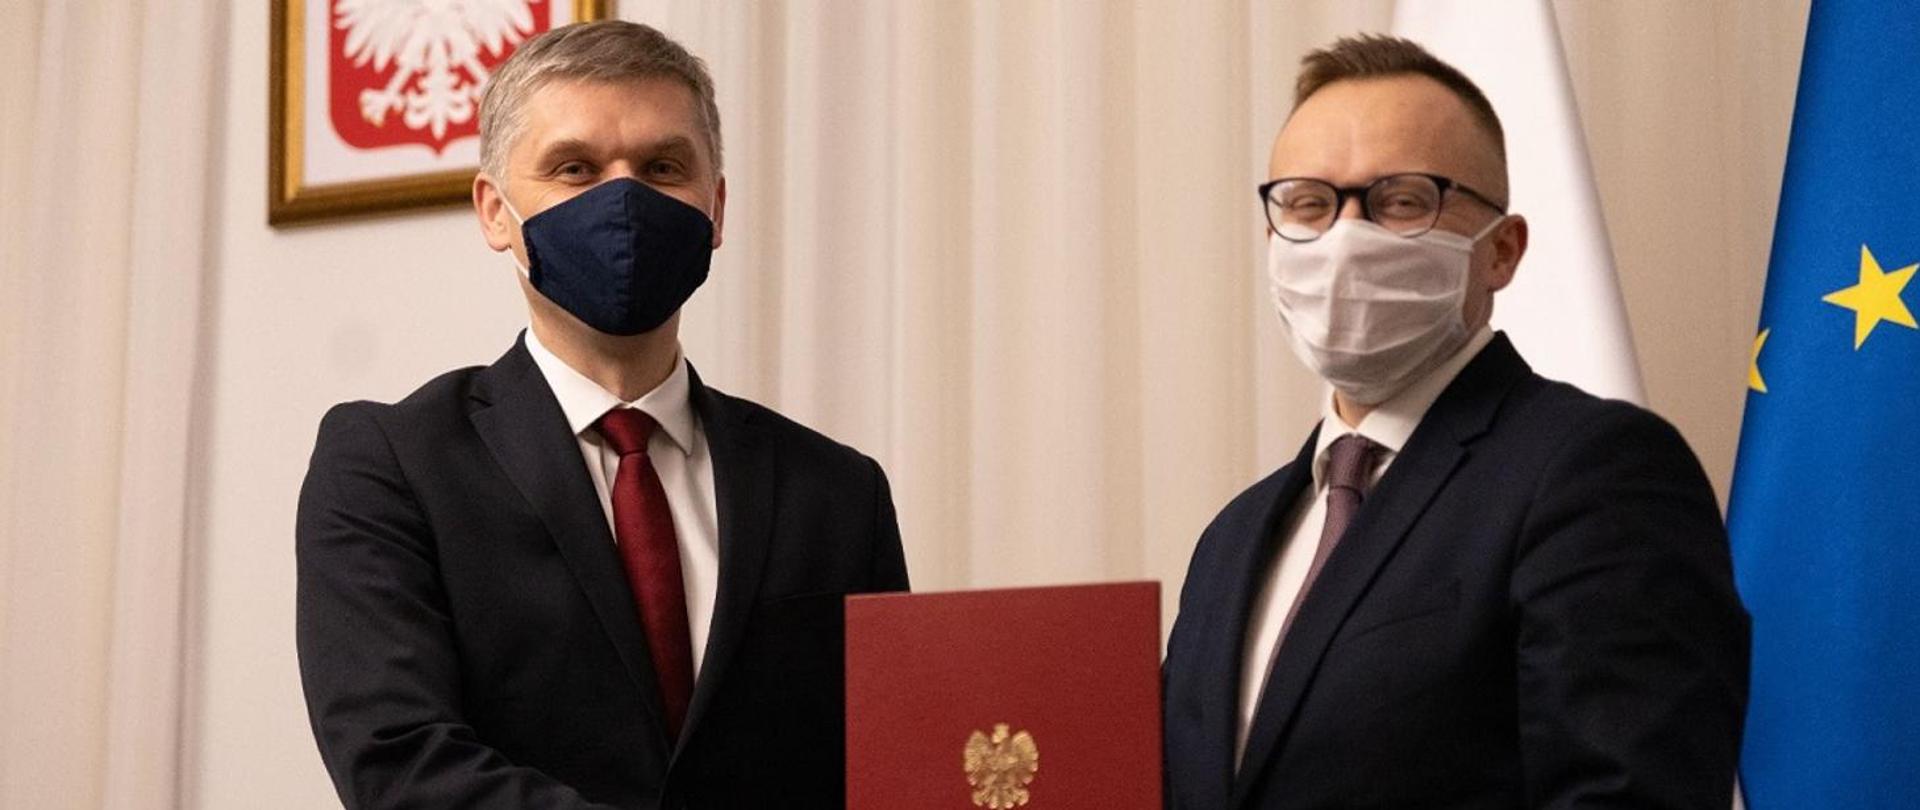 Minister of Economic Development and Technology Piotr Nowak and Minister Artur Soboń wearing masksa